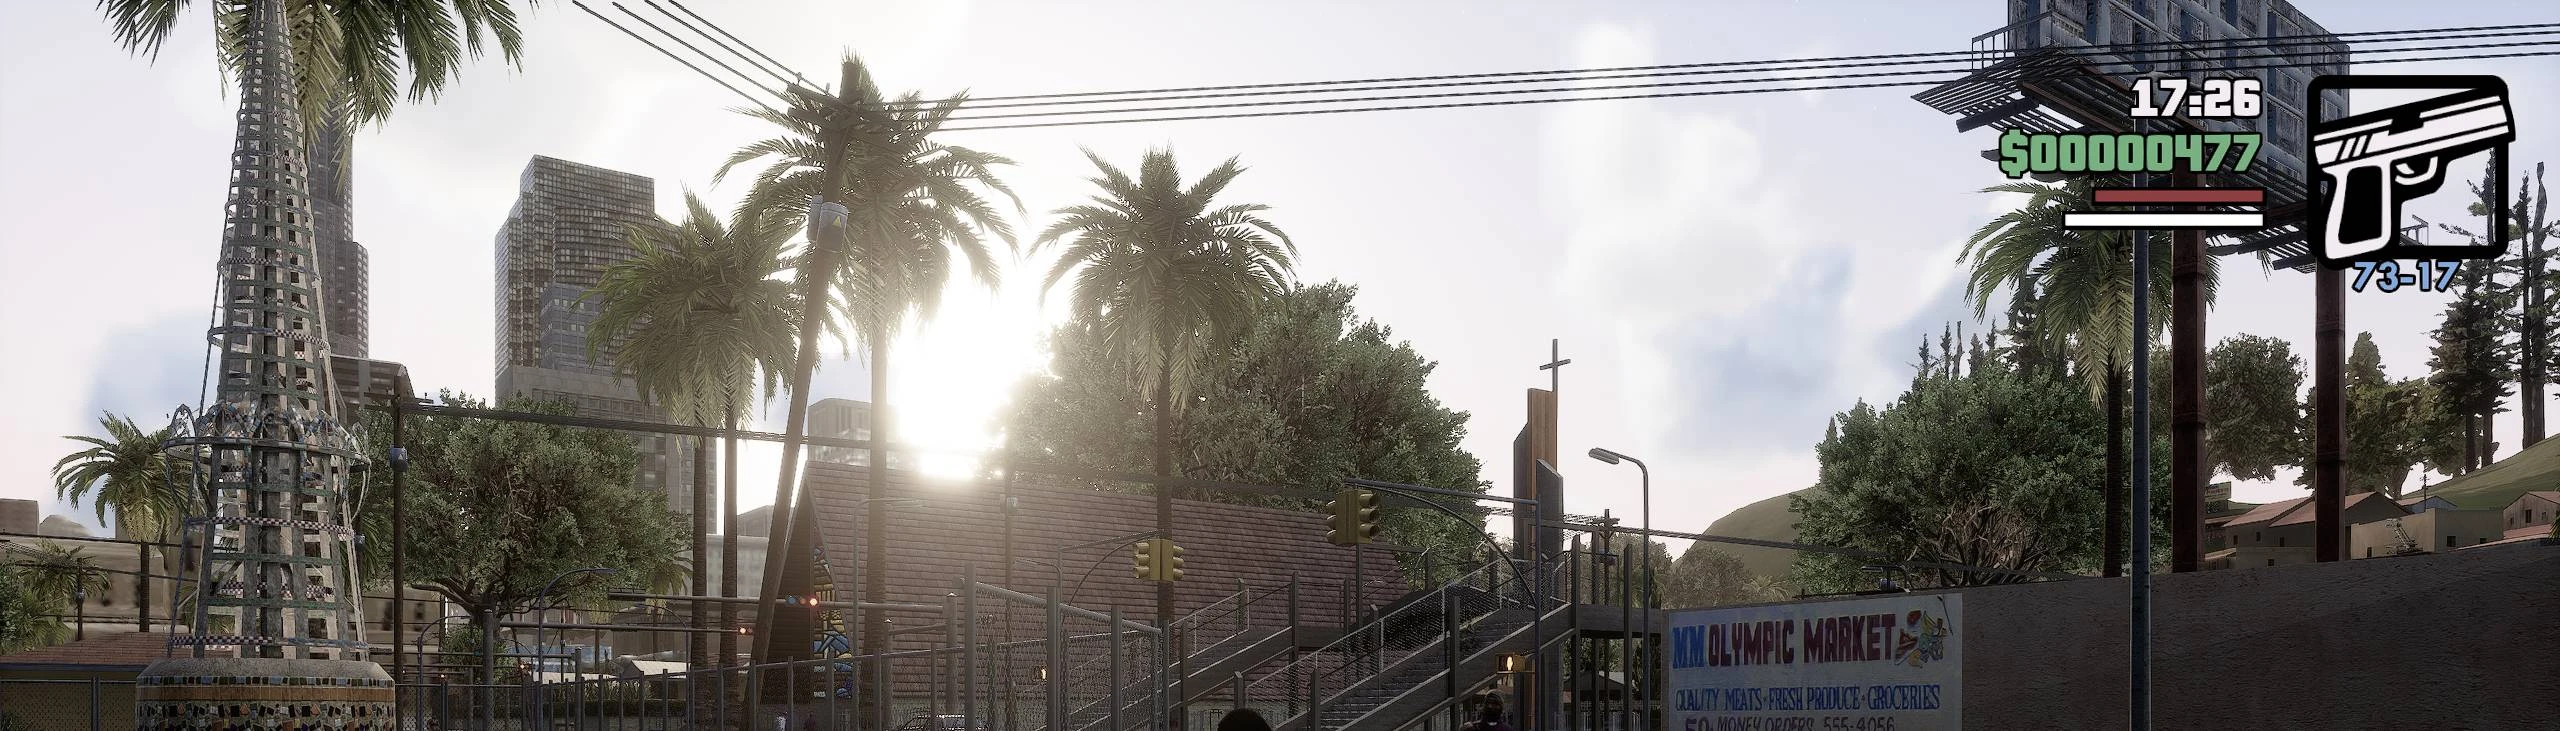 GTA San Andreas Definitive - HD Remaster